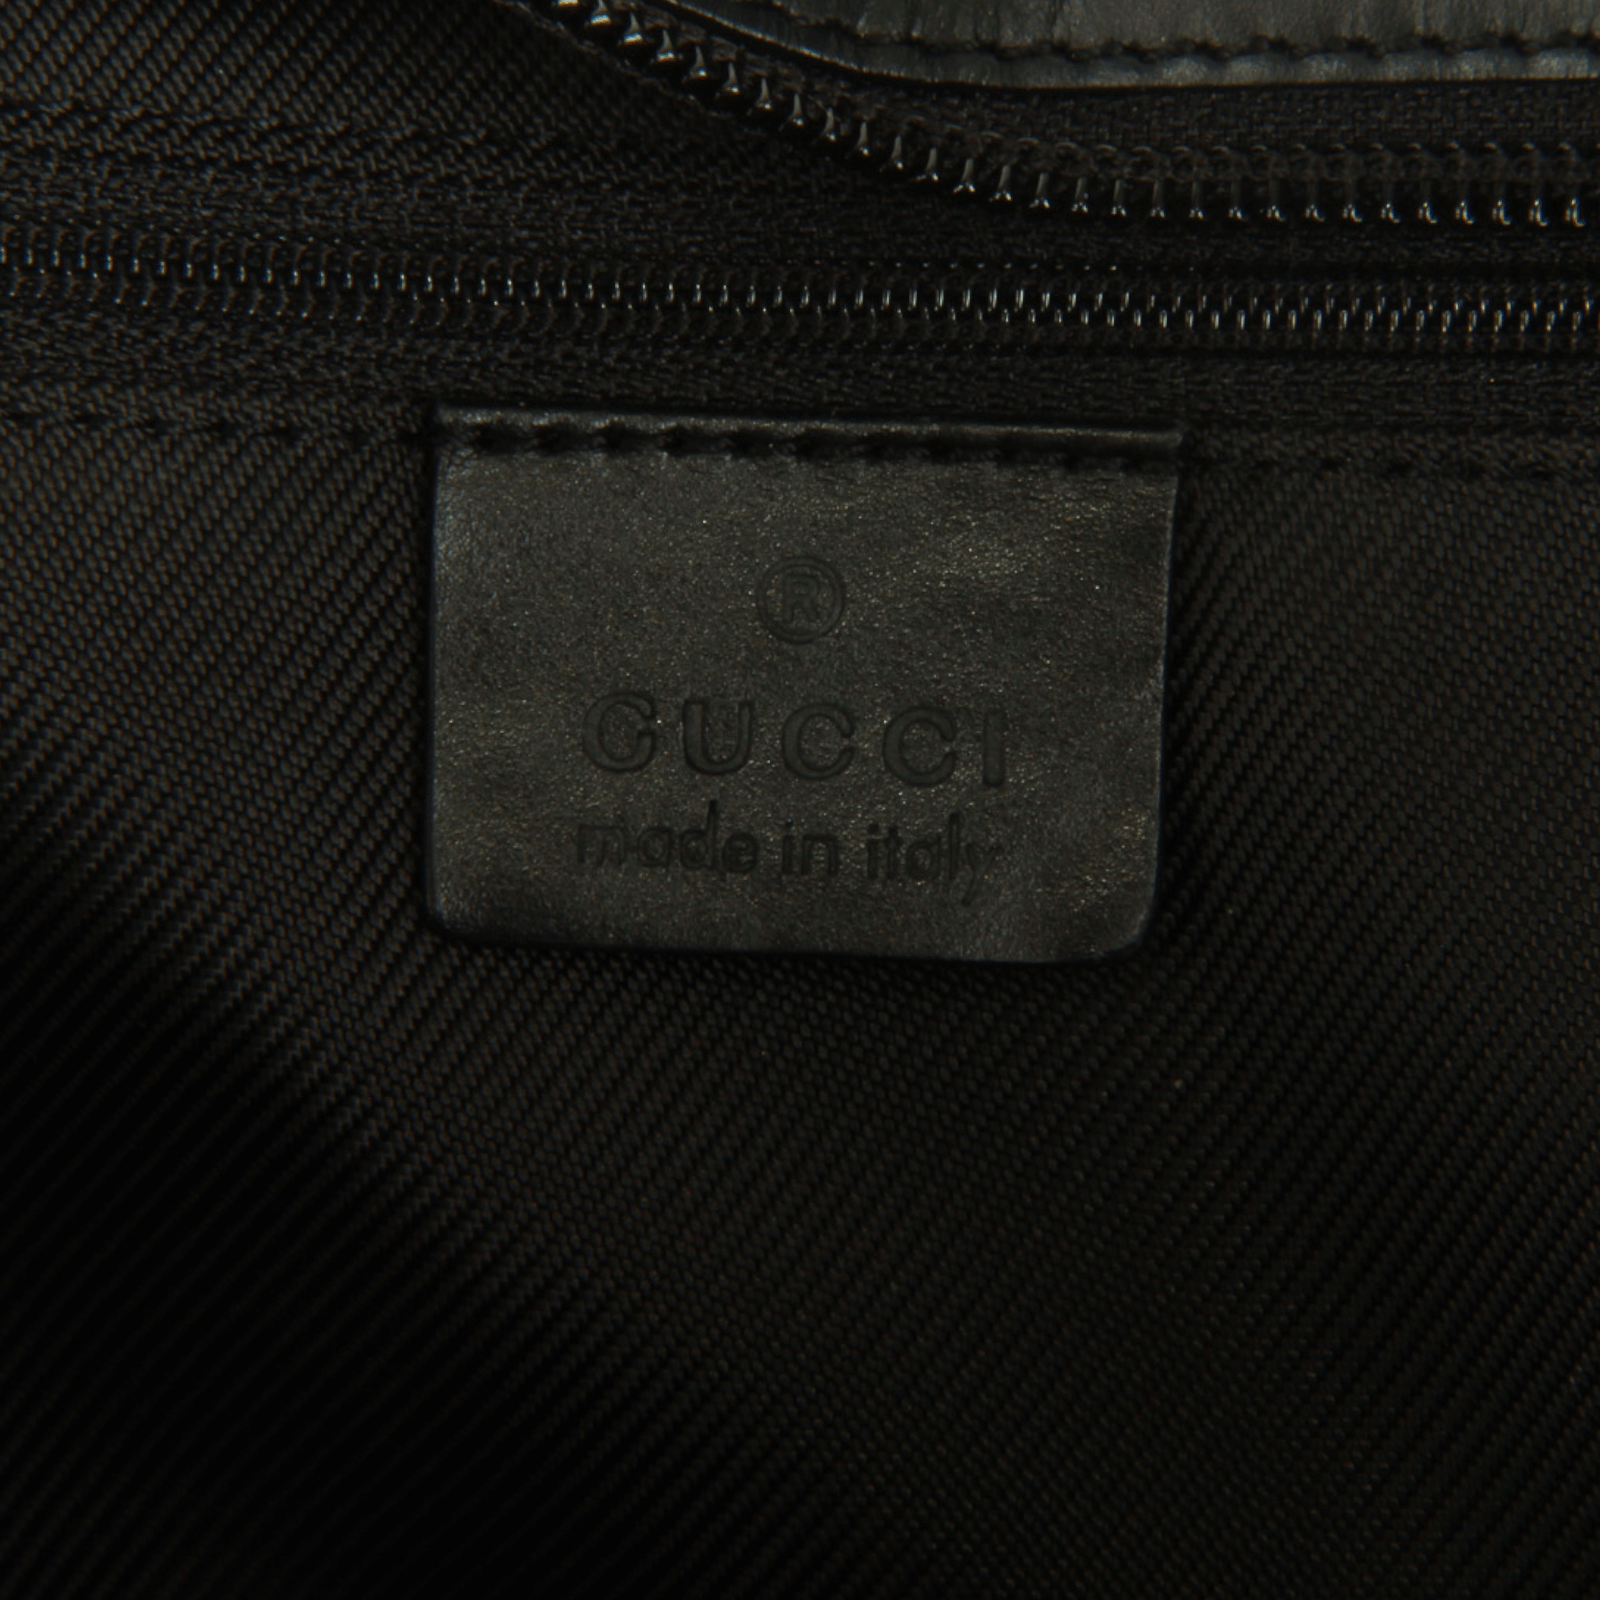 IMG-20210131-WA0021  Gucci handbags outlet, Gucci bag, Bags